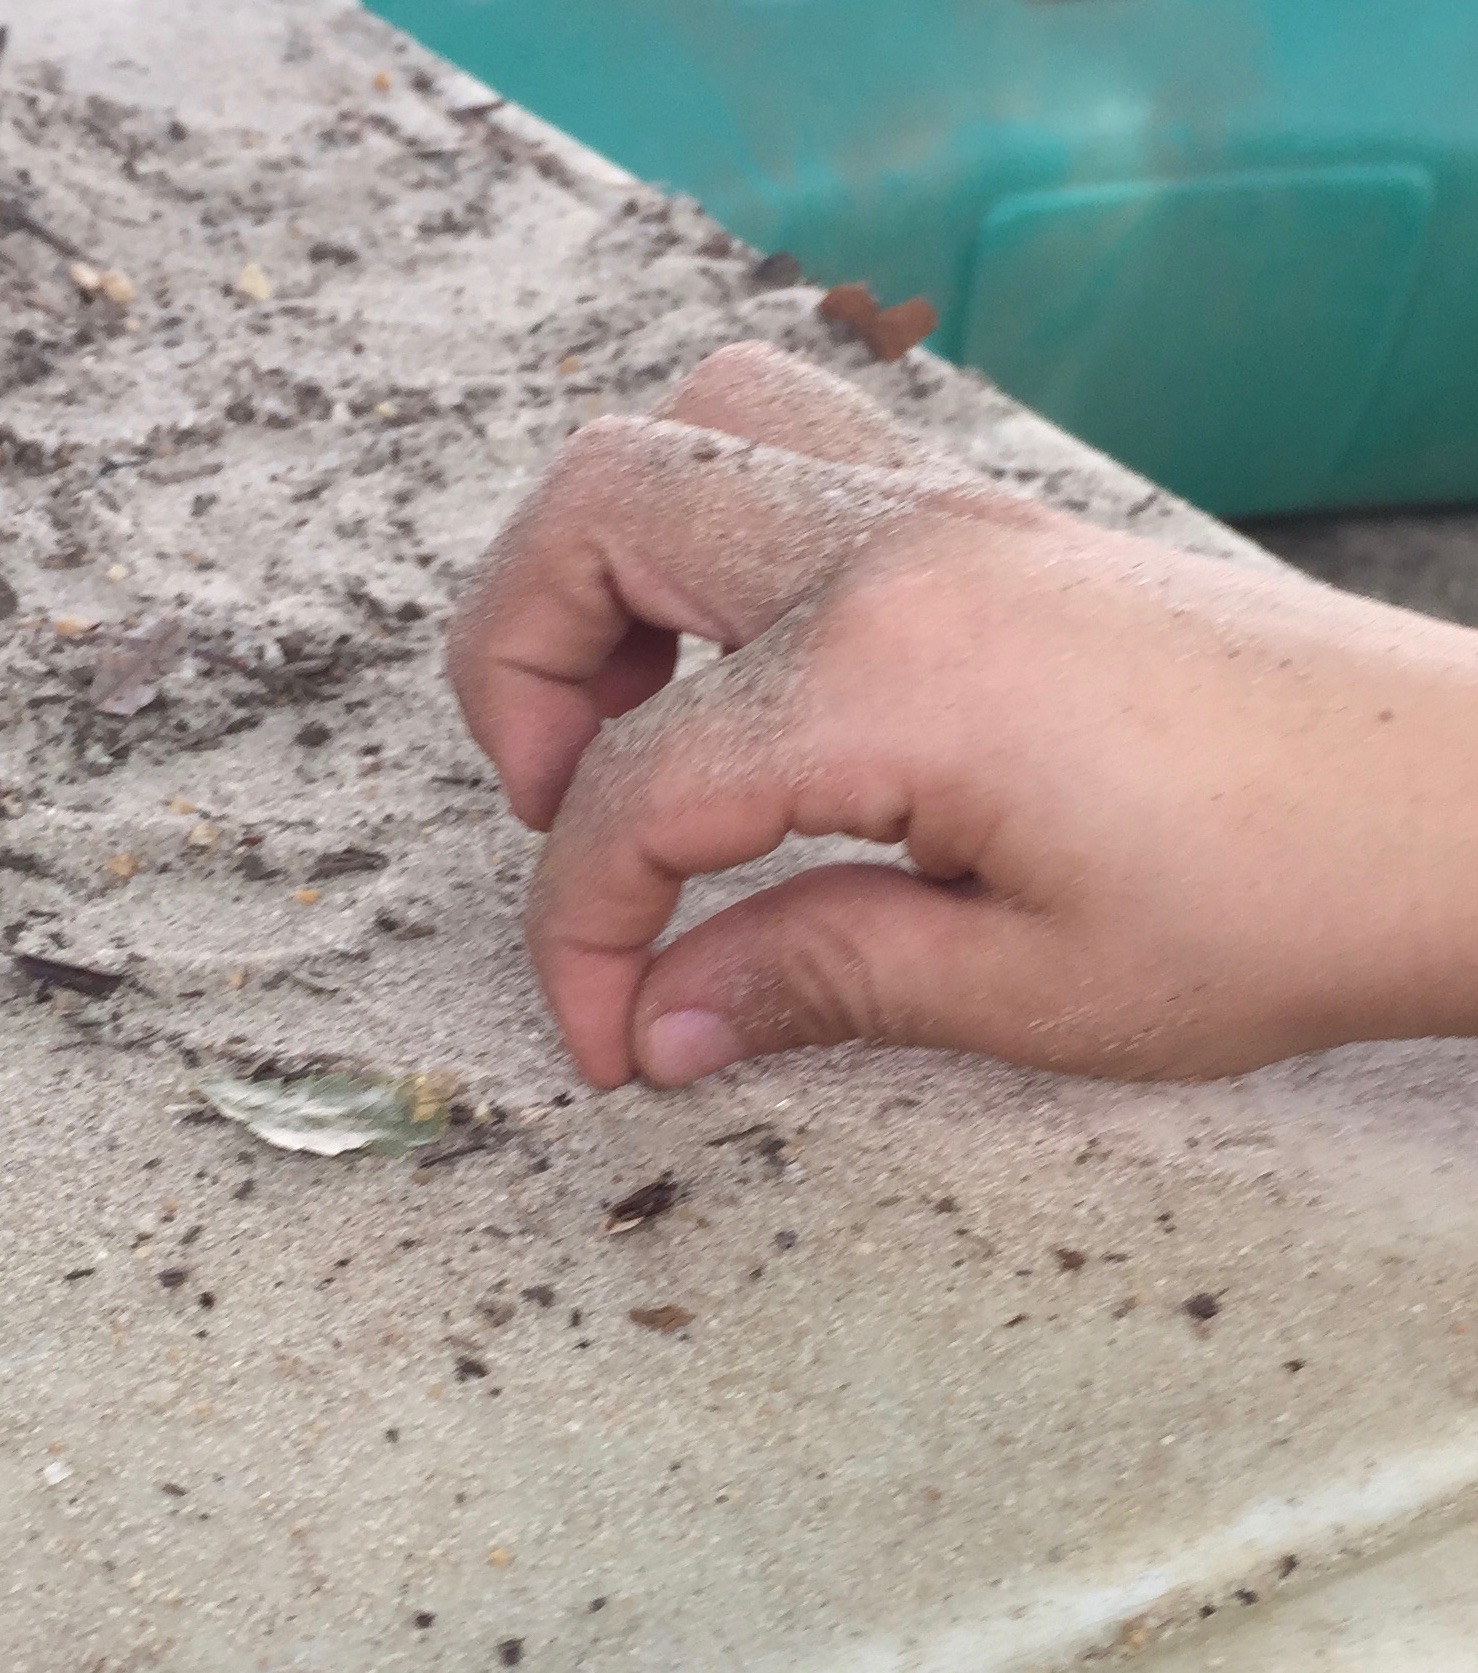 Child's hand pinching up dry sand grains.